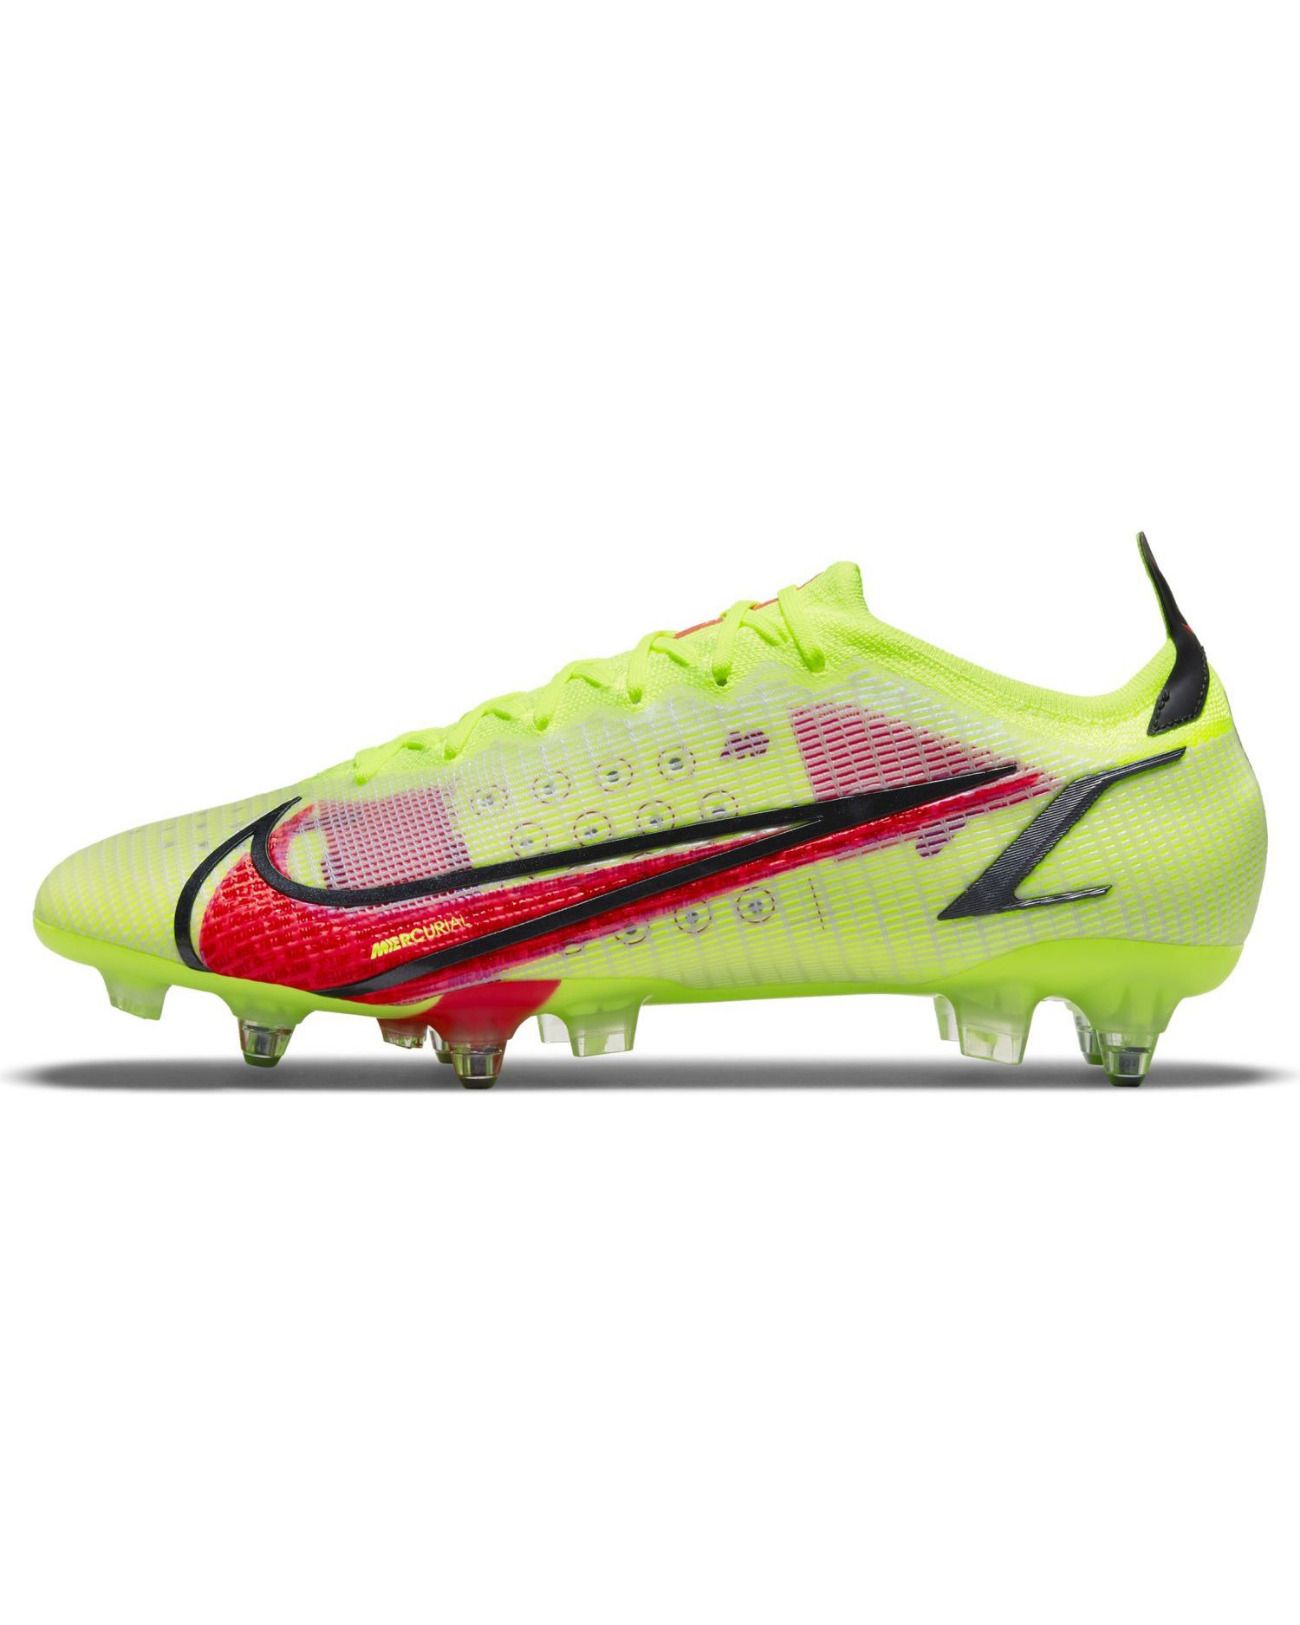 Nike Mercurial Unisex Football Shoes - CV0988-760 - Yellow